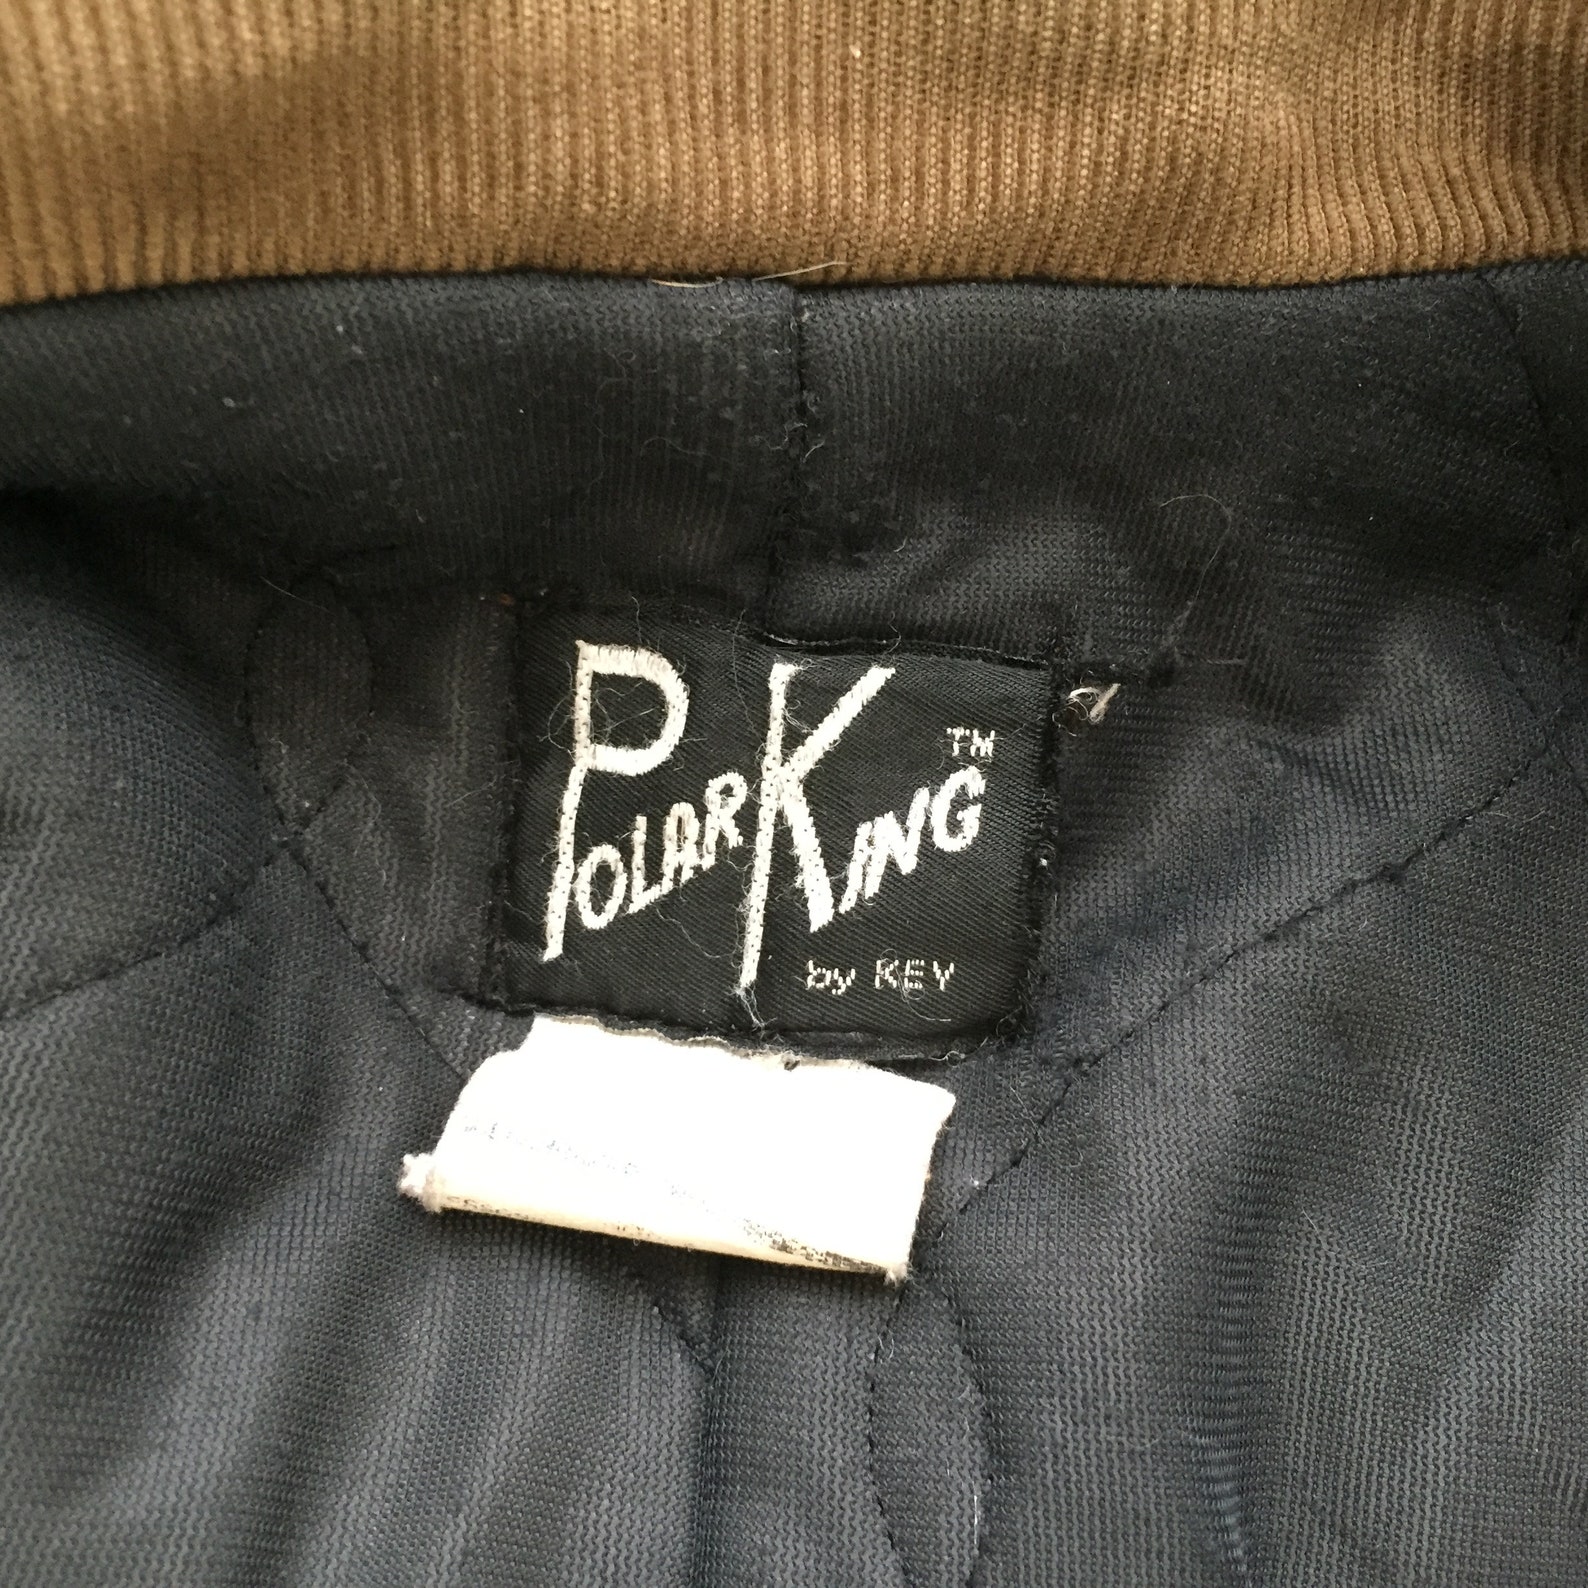 Vintage 1960s Polar King by Key Workwear Farm Ranch Chore Coat Jacket ...